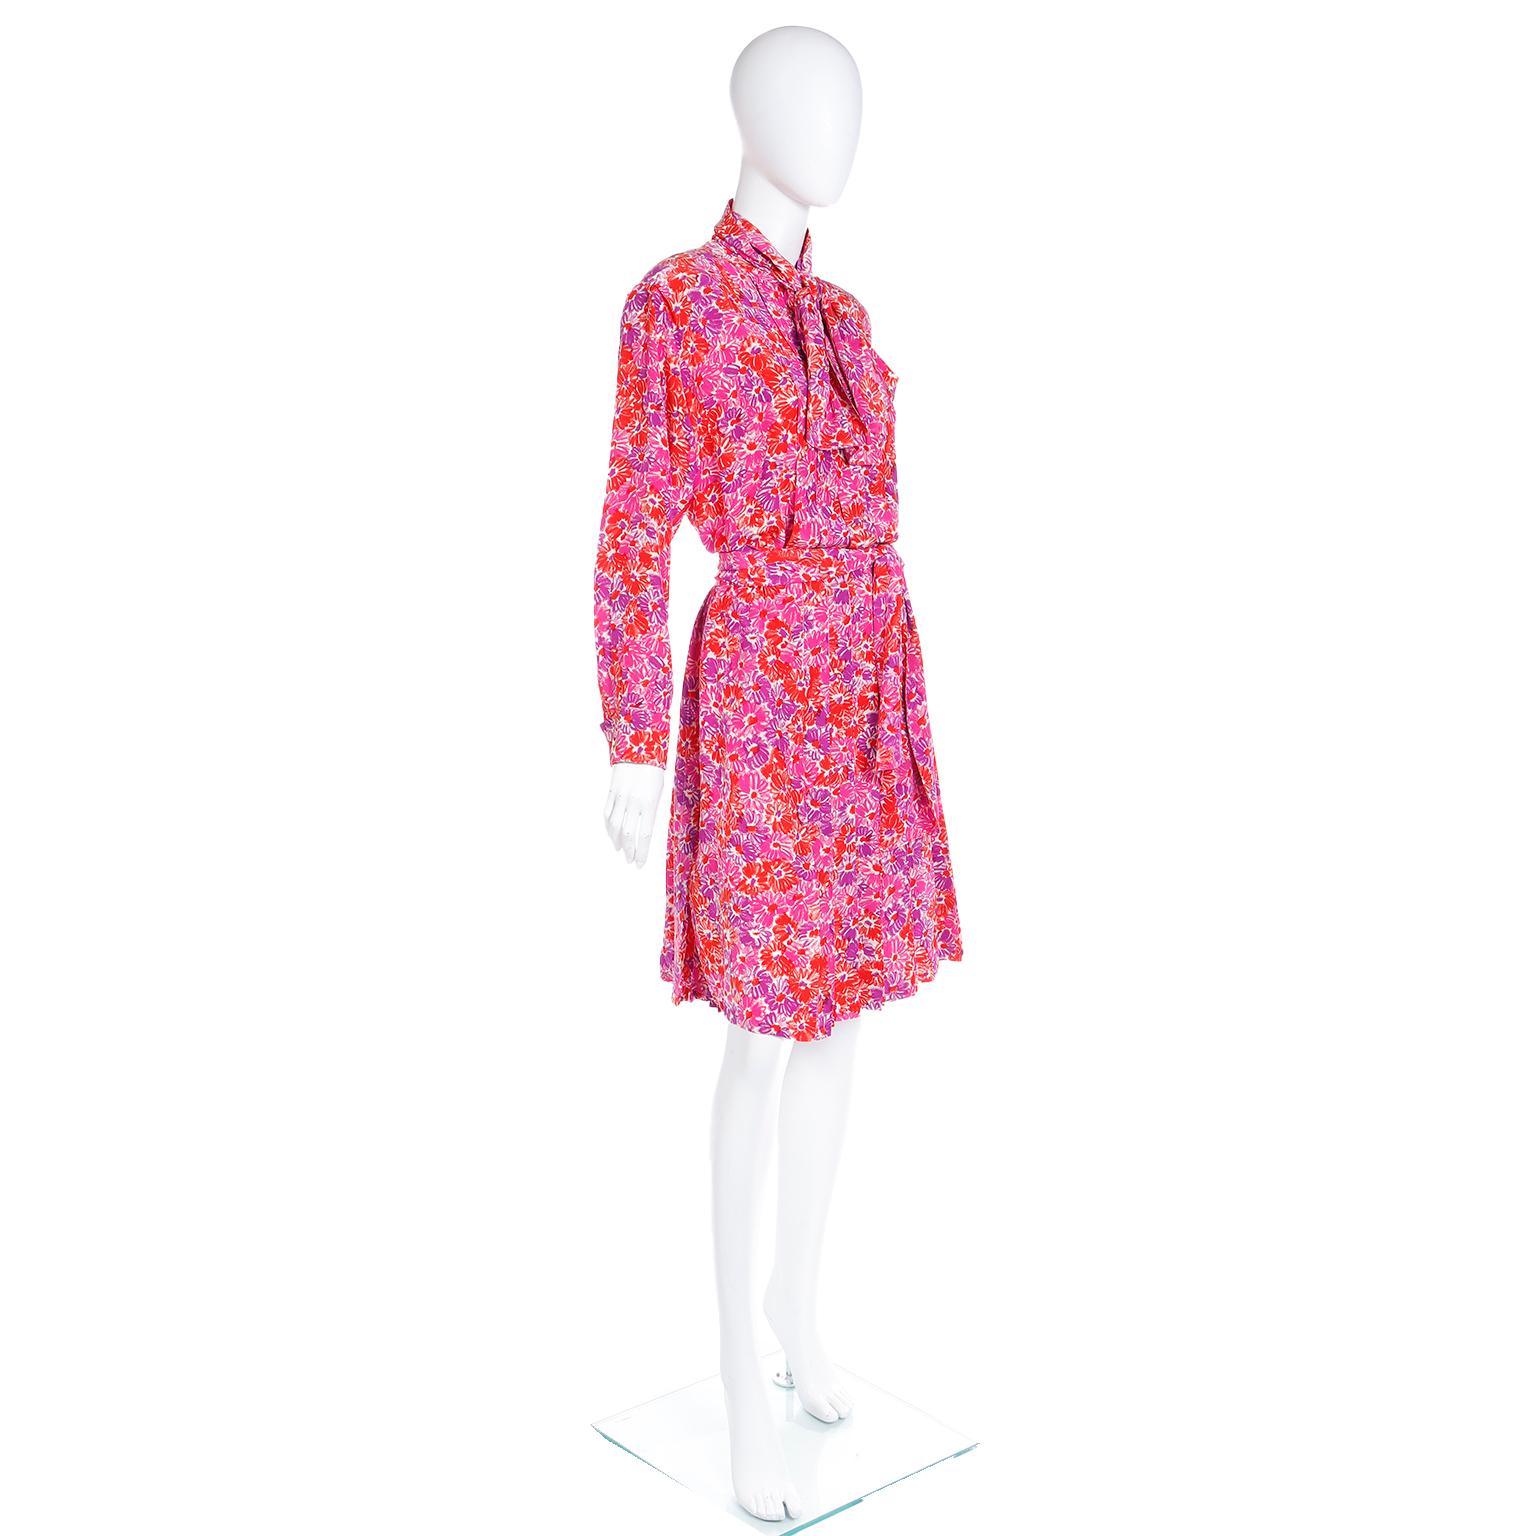 Yves Saint Laurent S/S 1989 Vintage Colorful Pink Floral Silk YSL Runway Dress For Sale 2